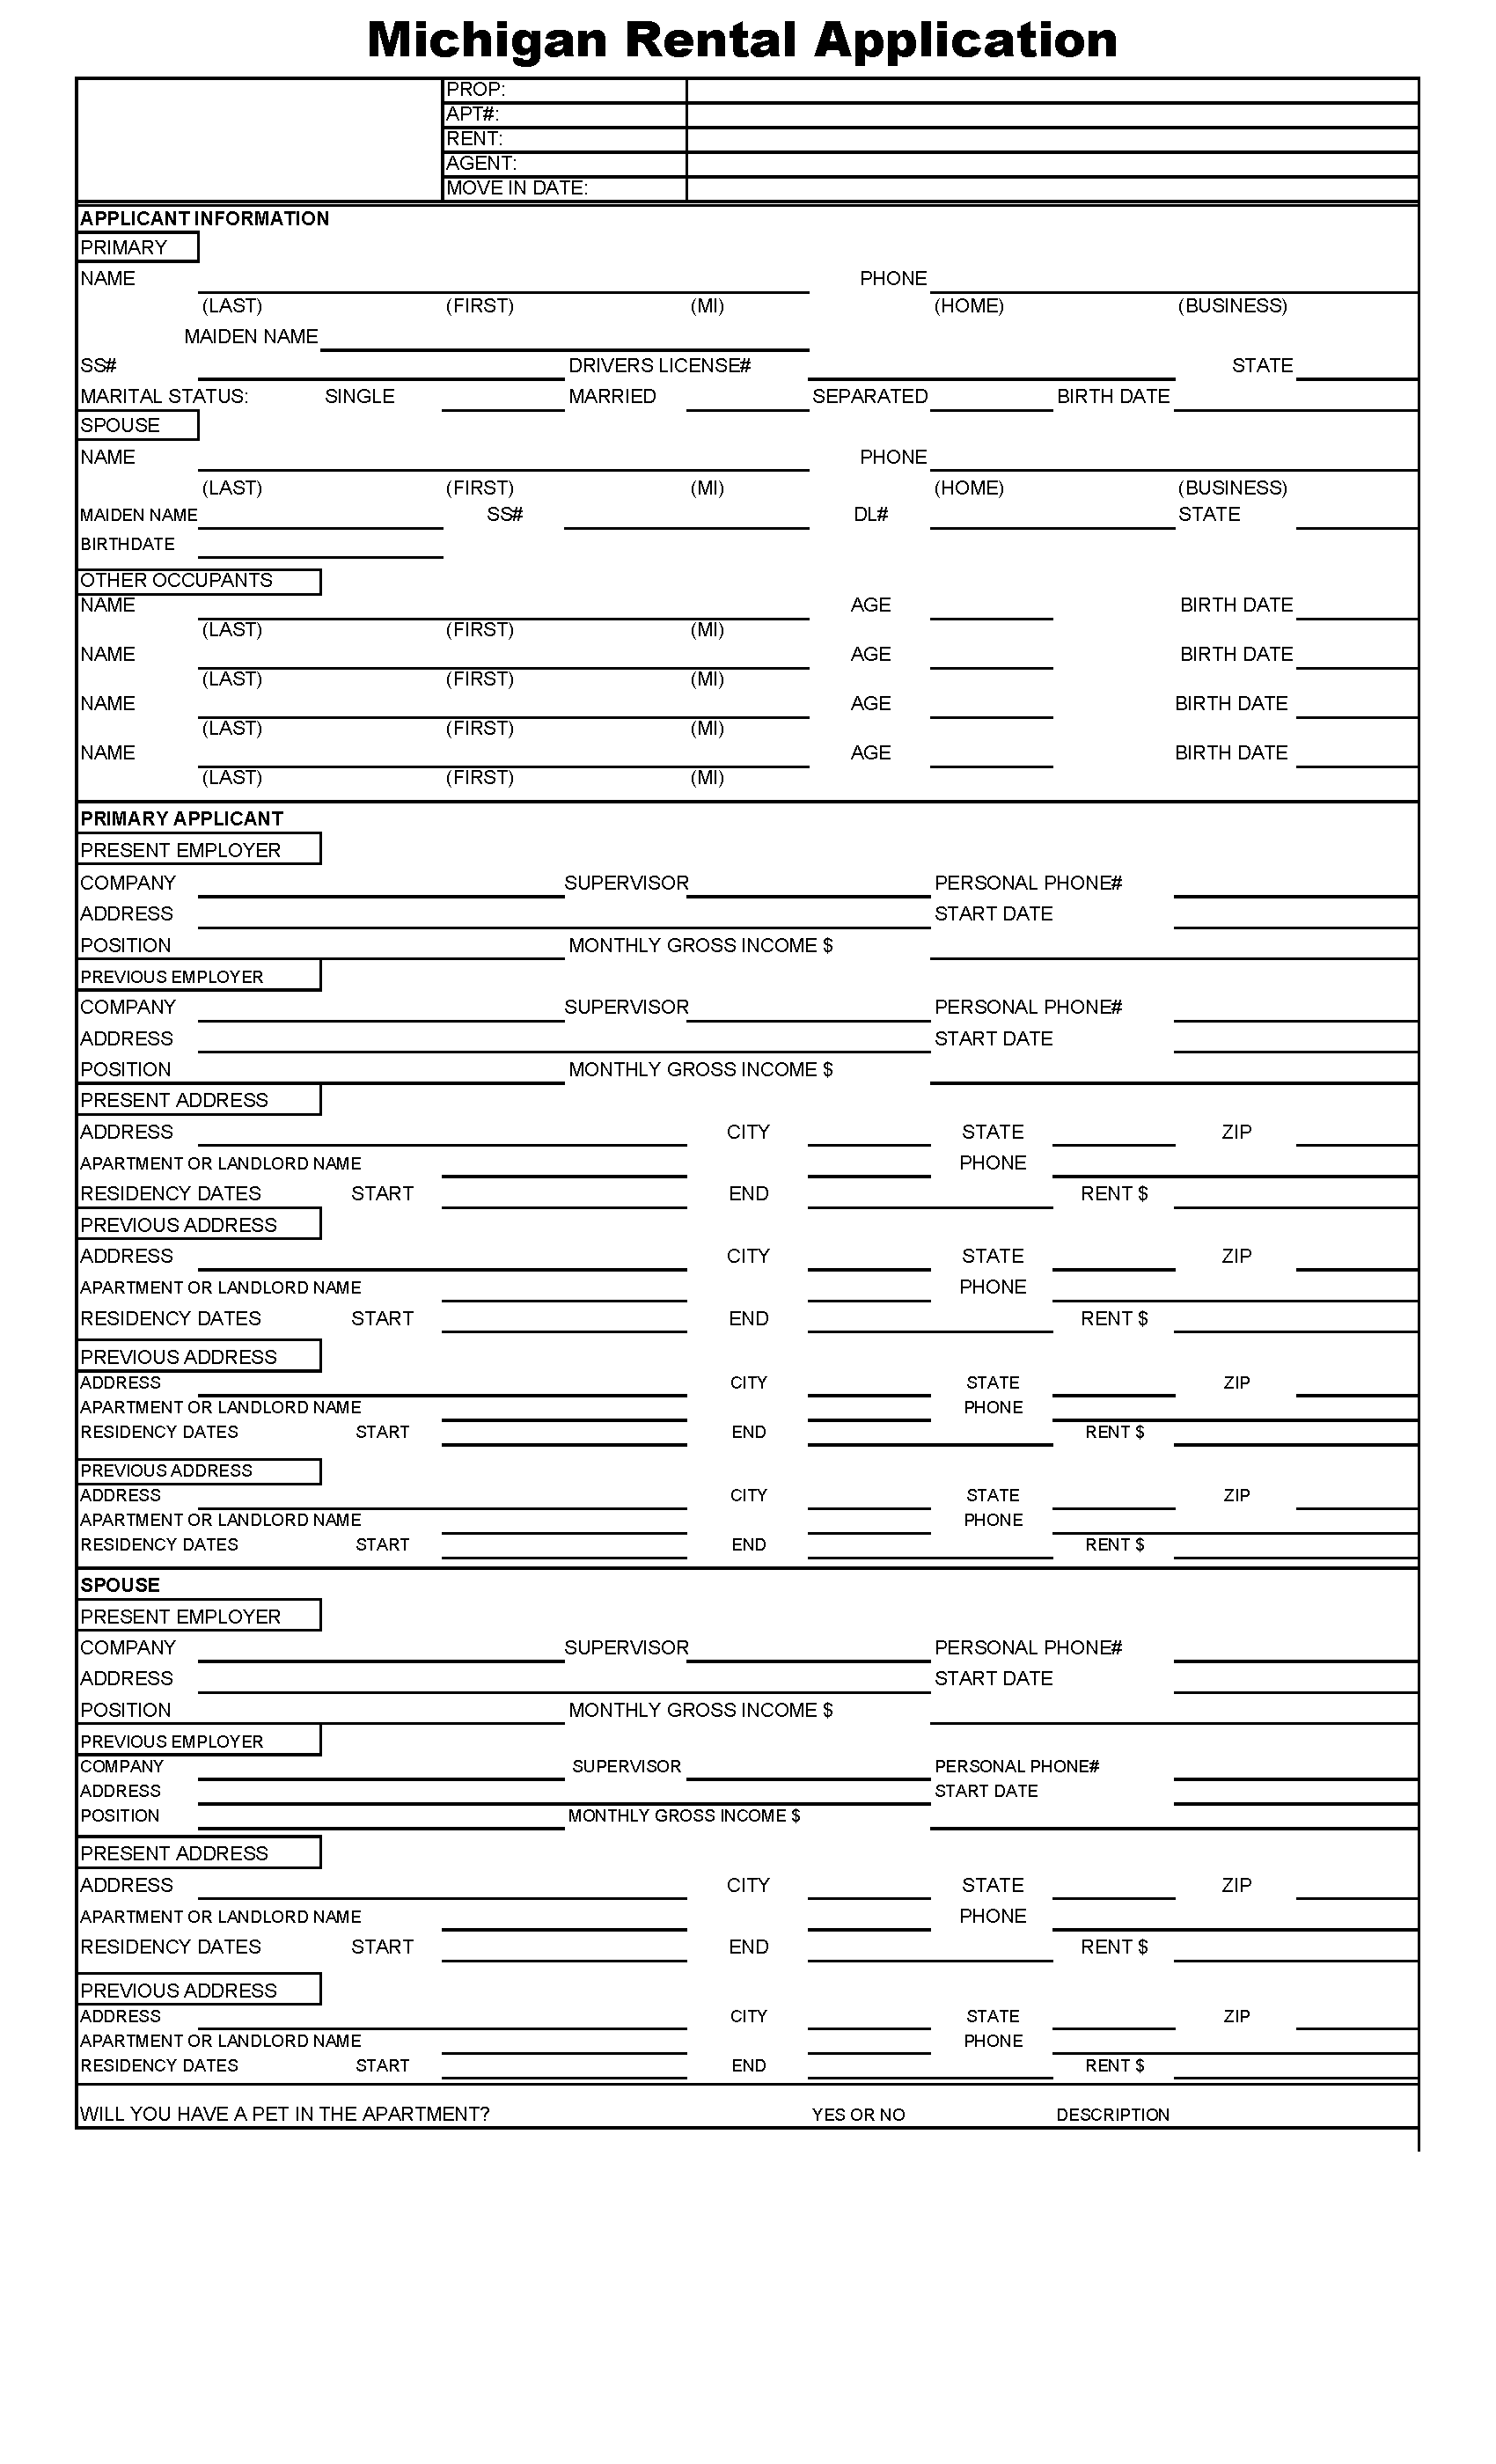 michigan-rental-application-pdf-2021